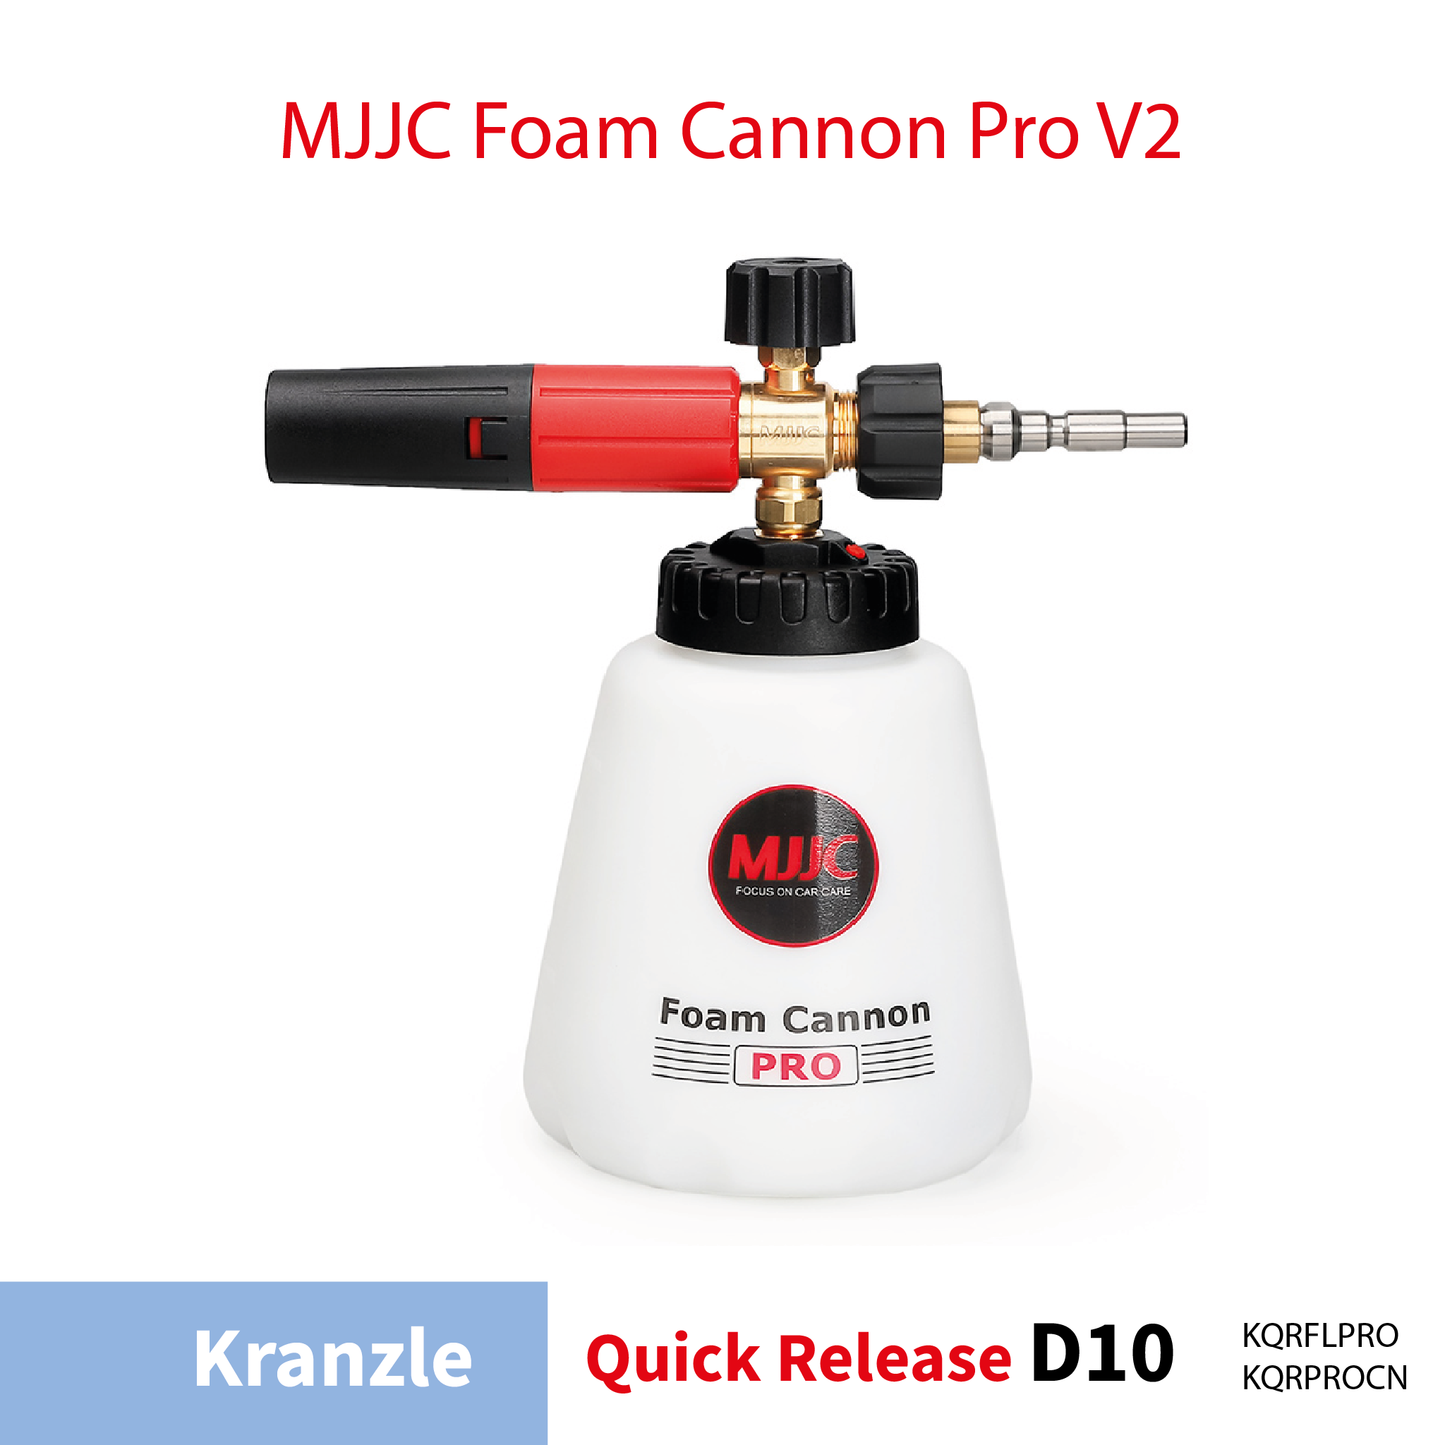 Kranzle pressure washer D10 Quick Connect - MJJC Foam Cannon Pro V2 (Pressure Washer Snow Foam Lance Gun)